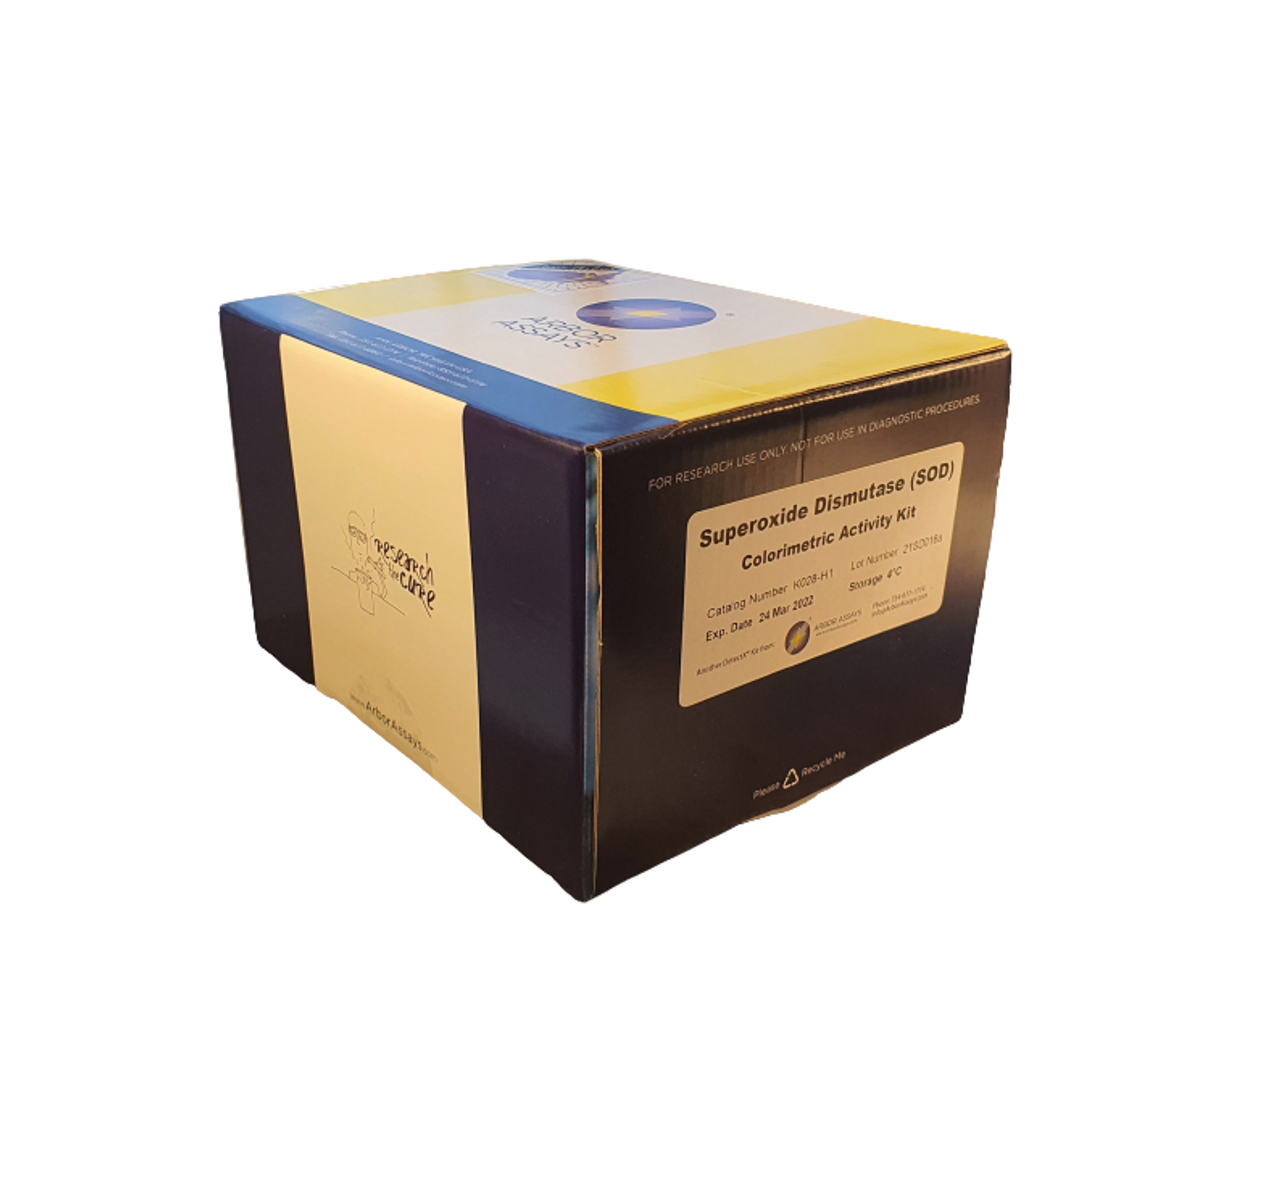 DetectX® Superoxide Dismutase (SOD) Colorimetric Activity Kit